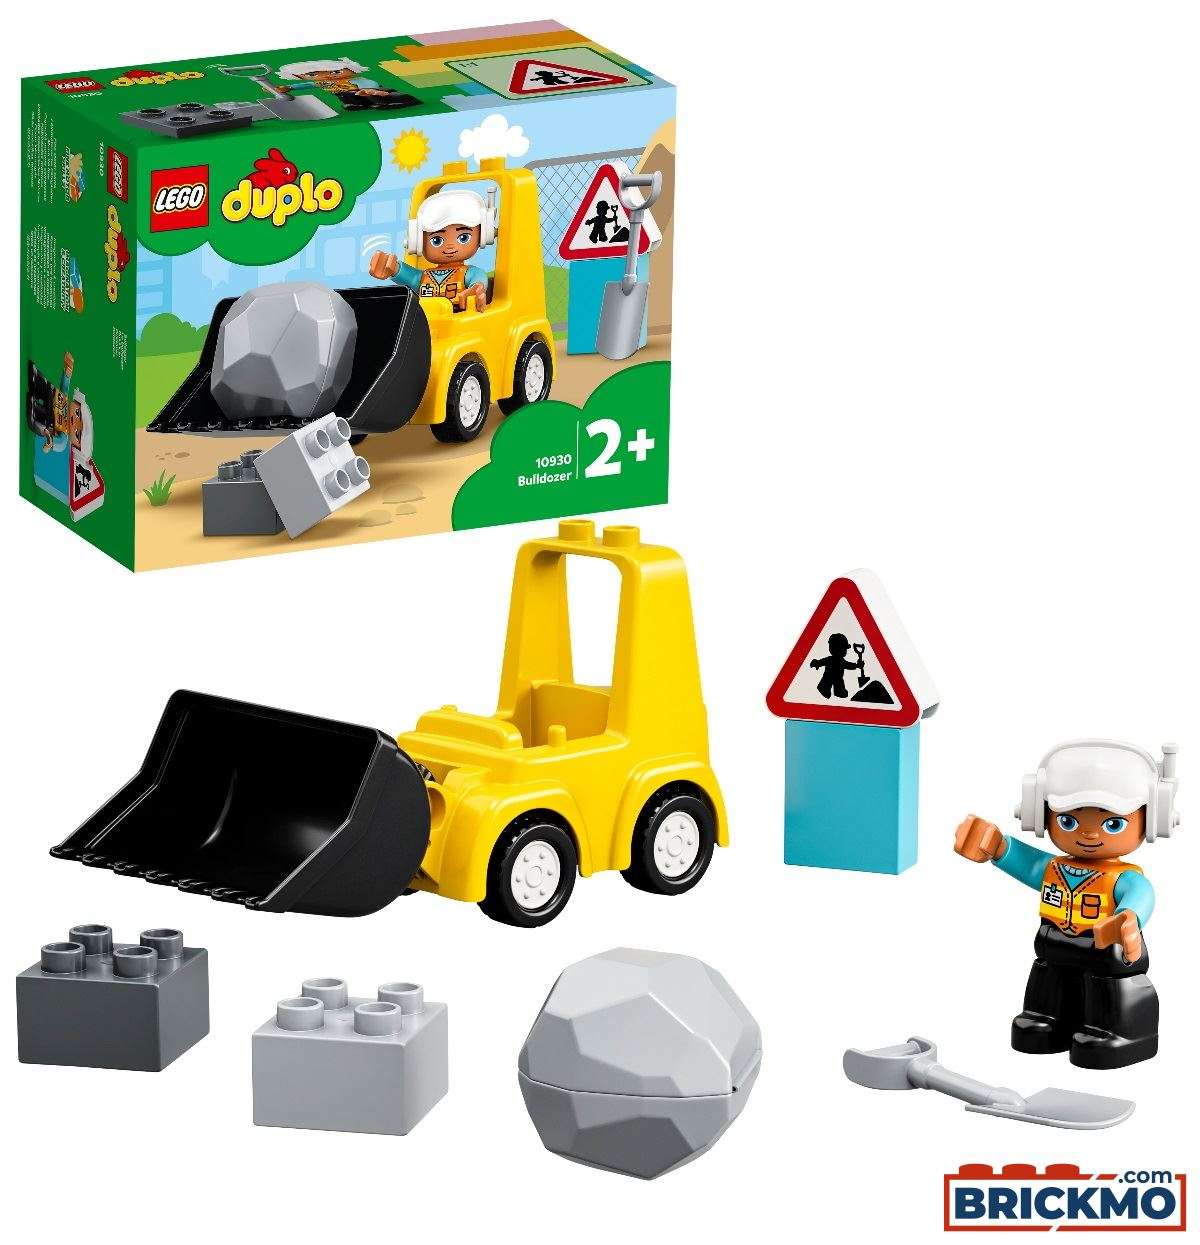 undertøj minimum veteran LEGO Duplo 10930 Bulldozer 10930 | TRUCKMO.com Lkw-Modelle